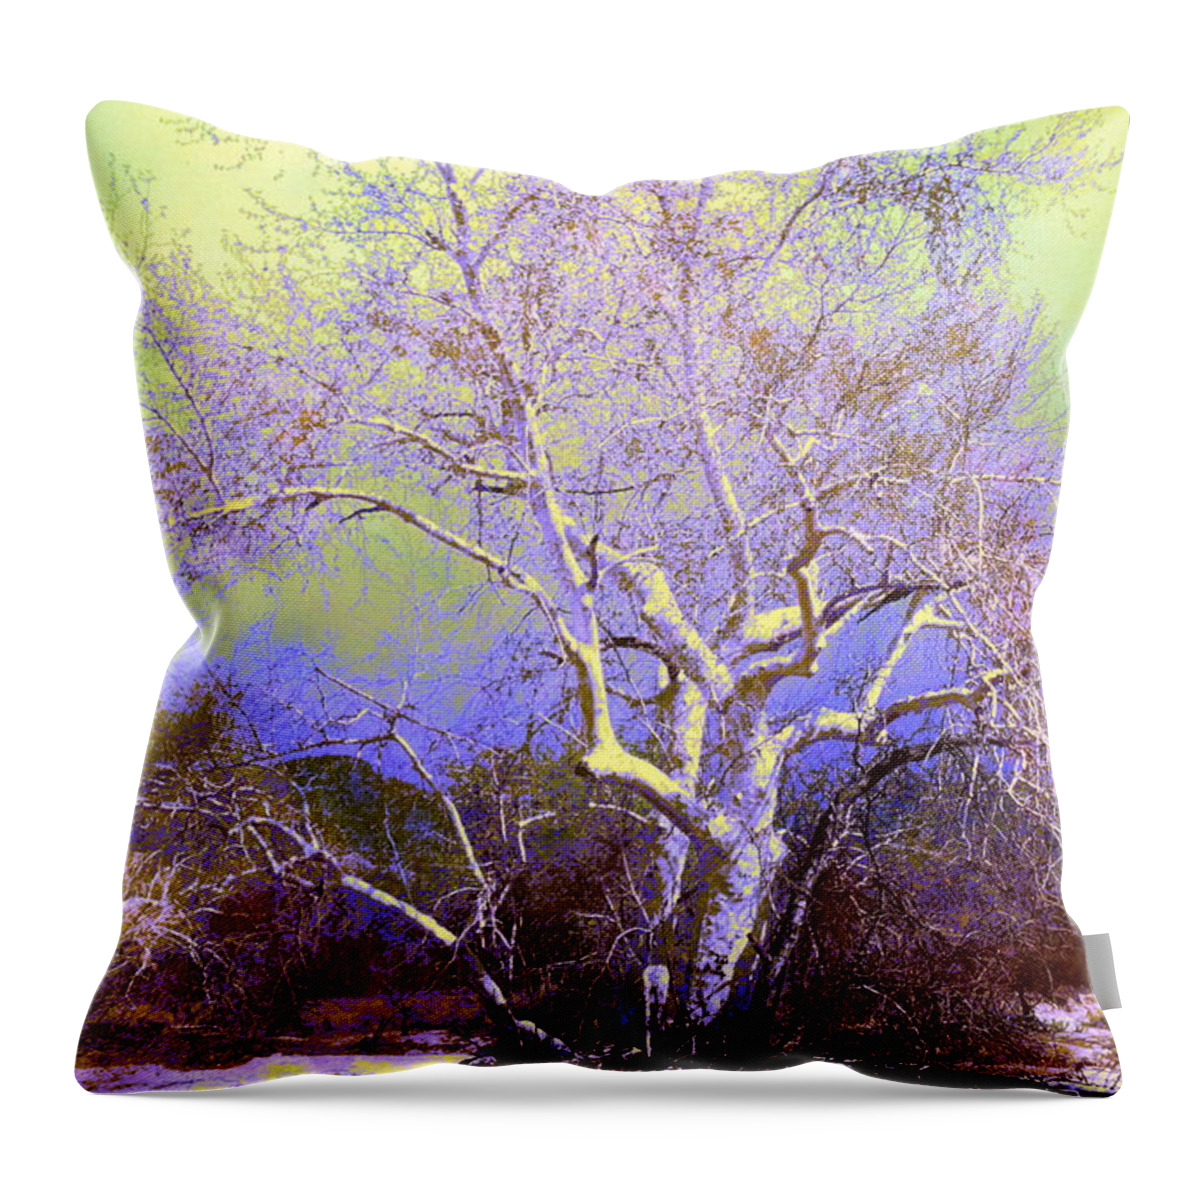 Tucson Throw Pillow featuring the photograph Enhanced Cottonwood Tree by M Diane Bonaparte